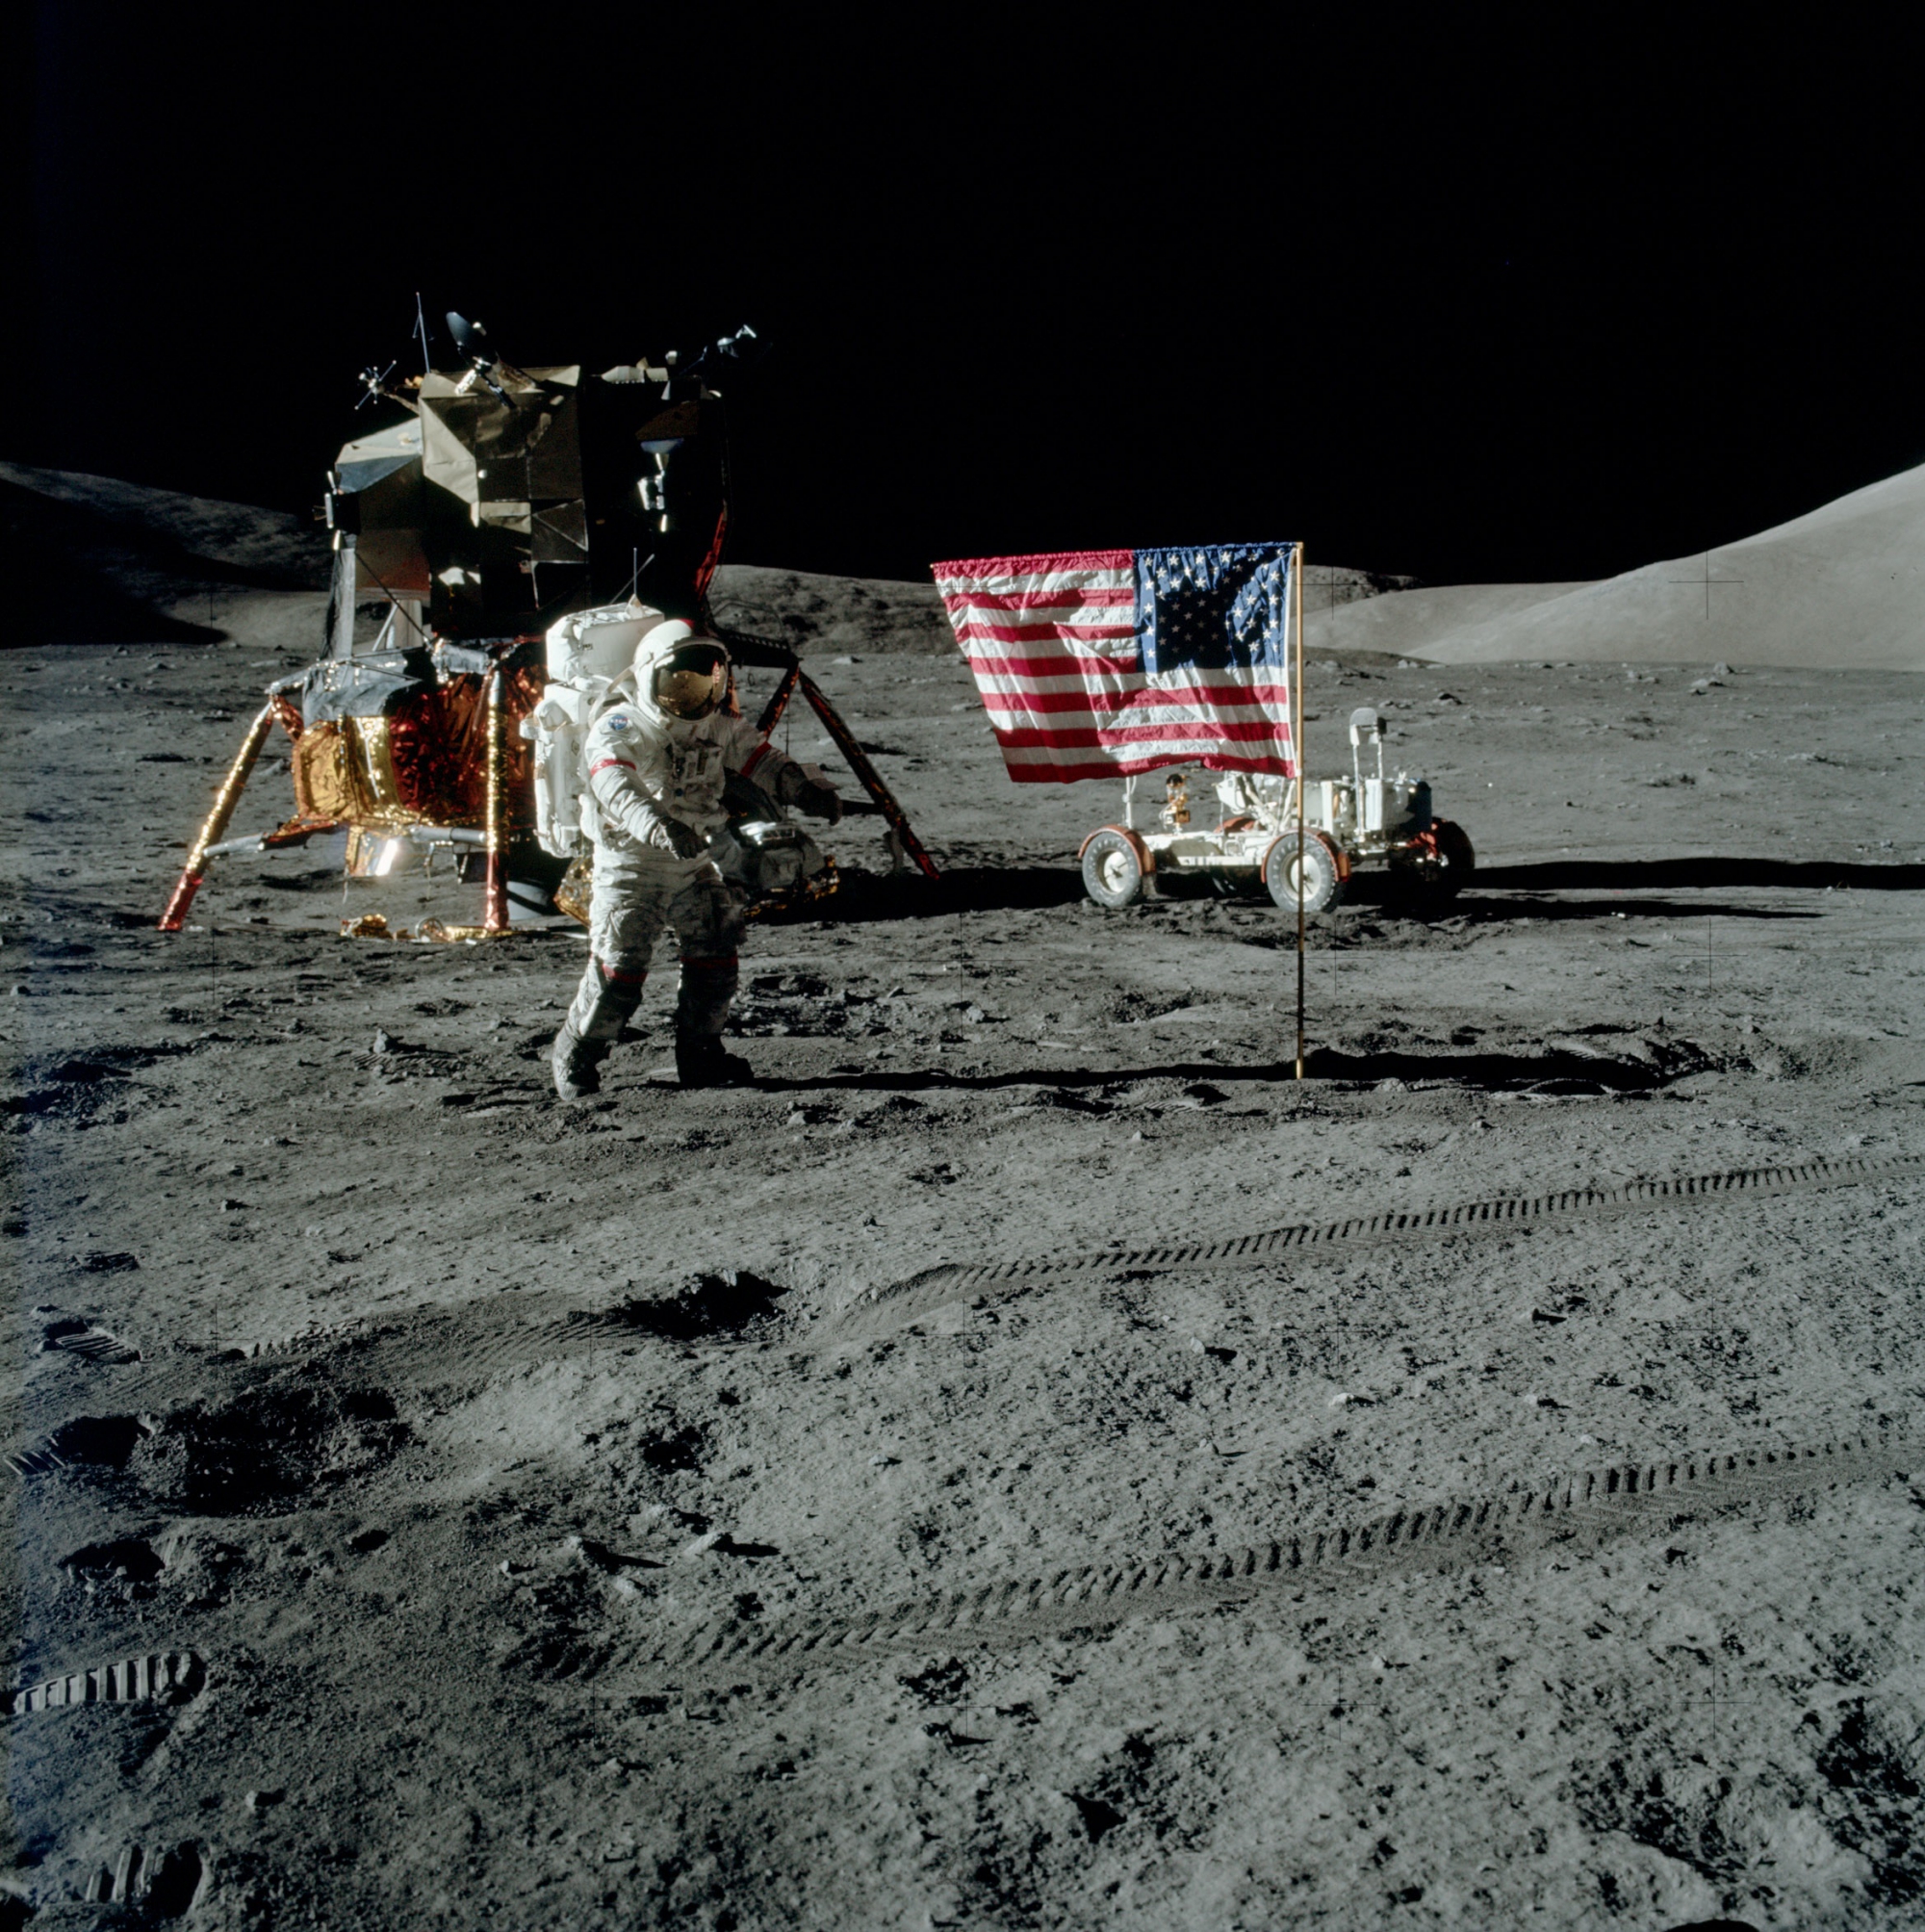 First land on the moon. Аполлон 17 фото. Лунный модуль Аполлон 17. Снимки высадки американцев на луну.